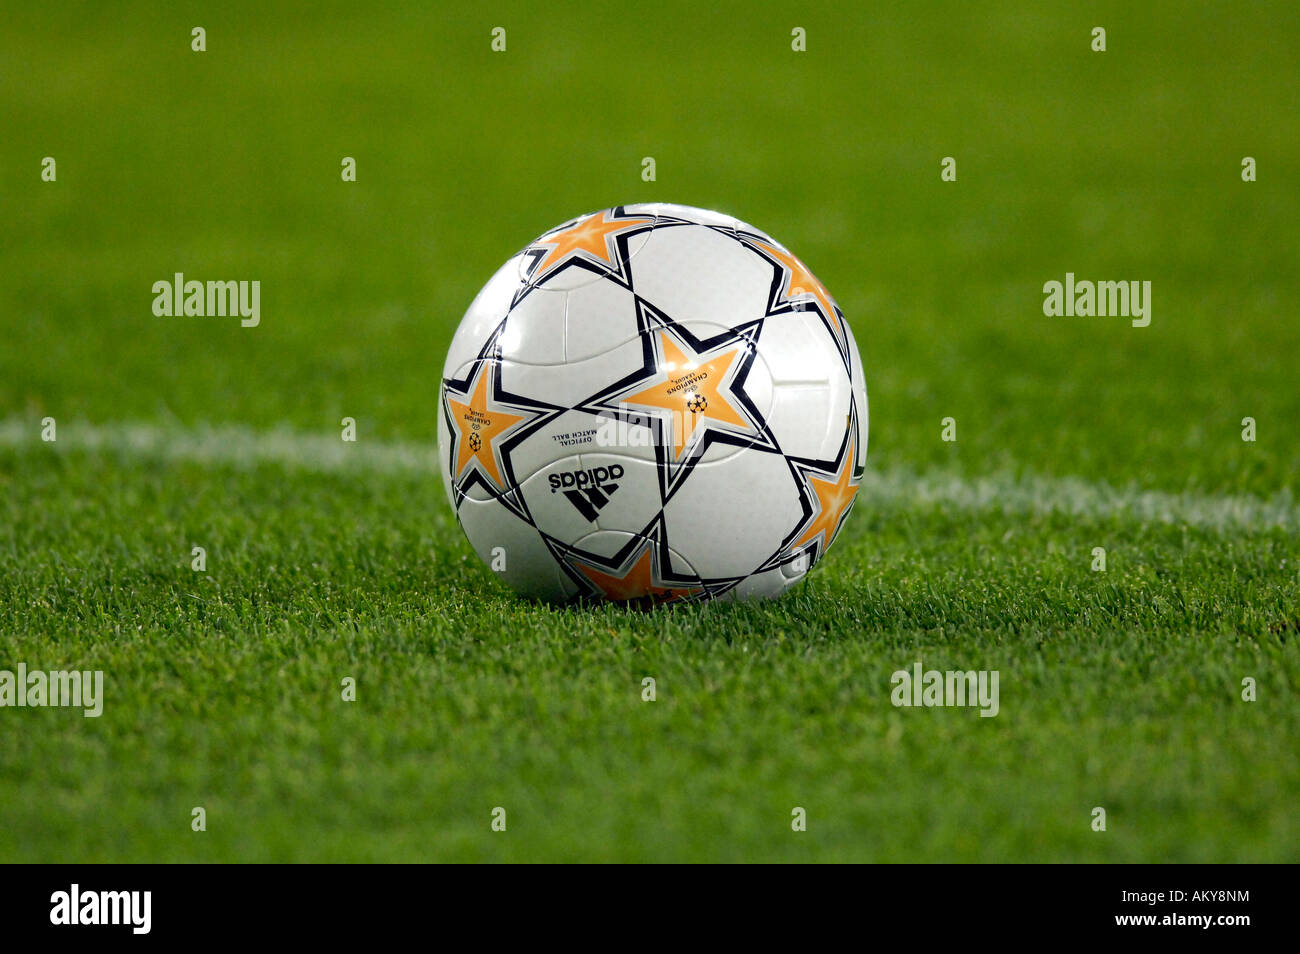 UEFA CHAMPIONS LEAGUE ball Stockfoto